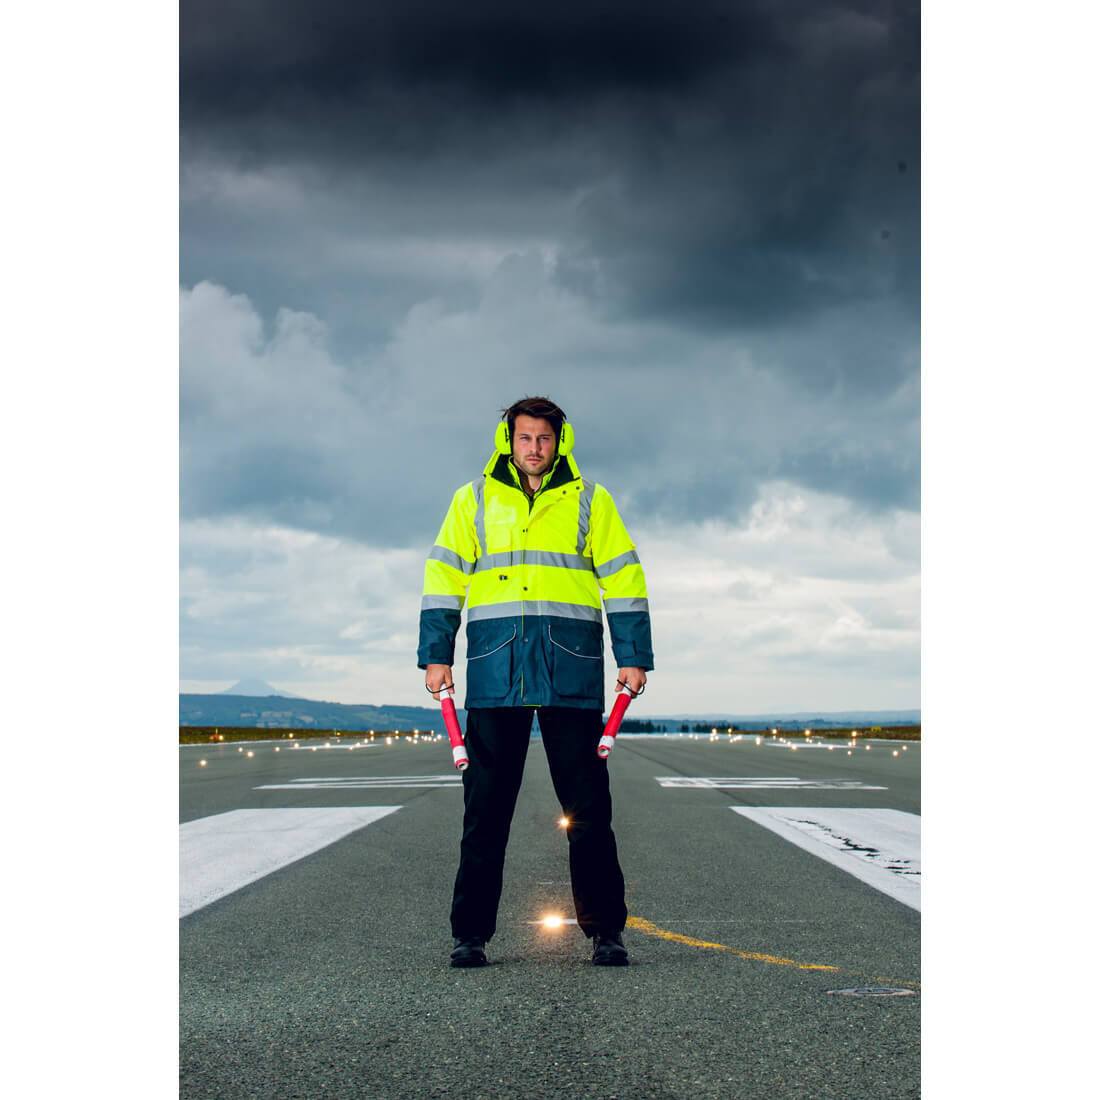 Warnschutz 7-in-1 Kontrast Verkehrsjacke - Arbeitskleidung